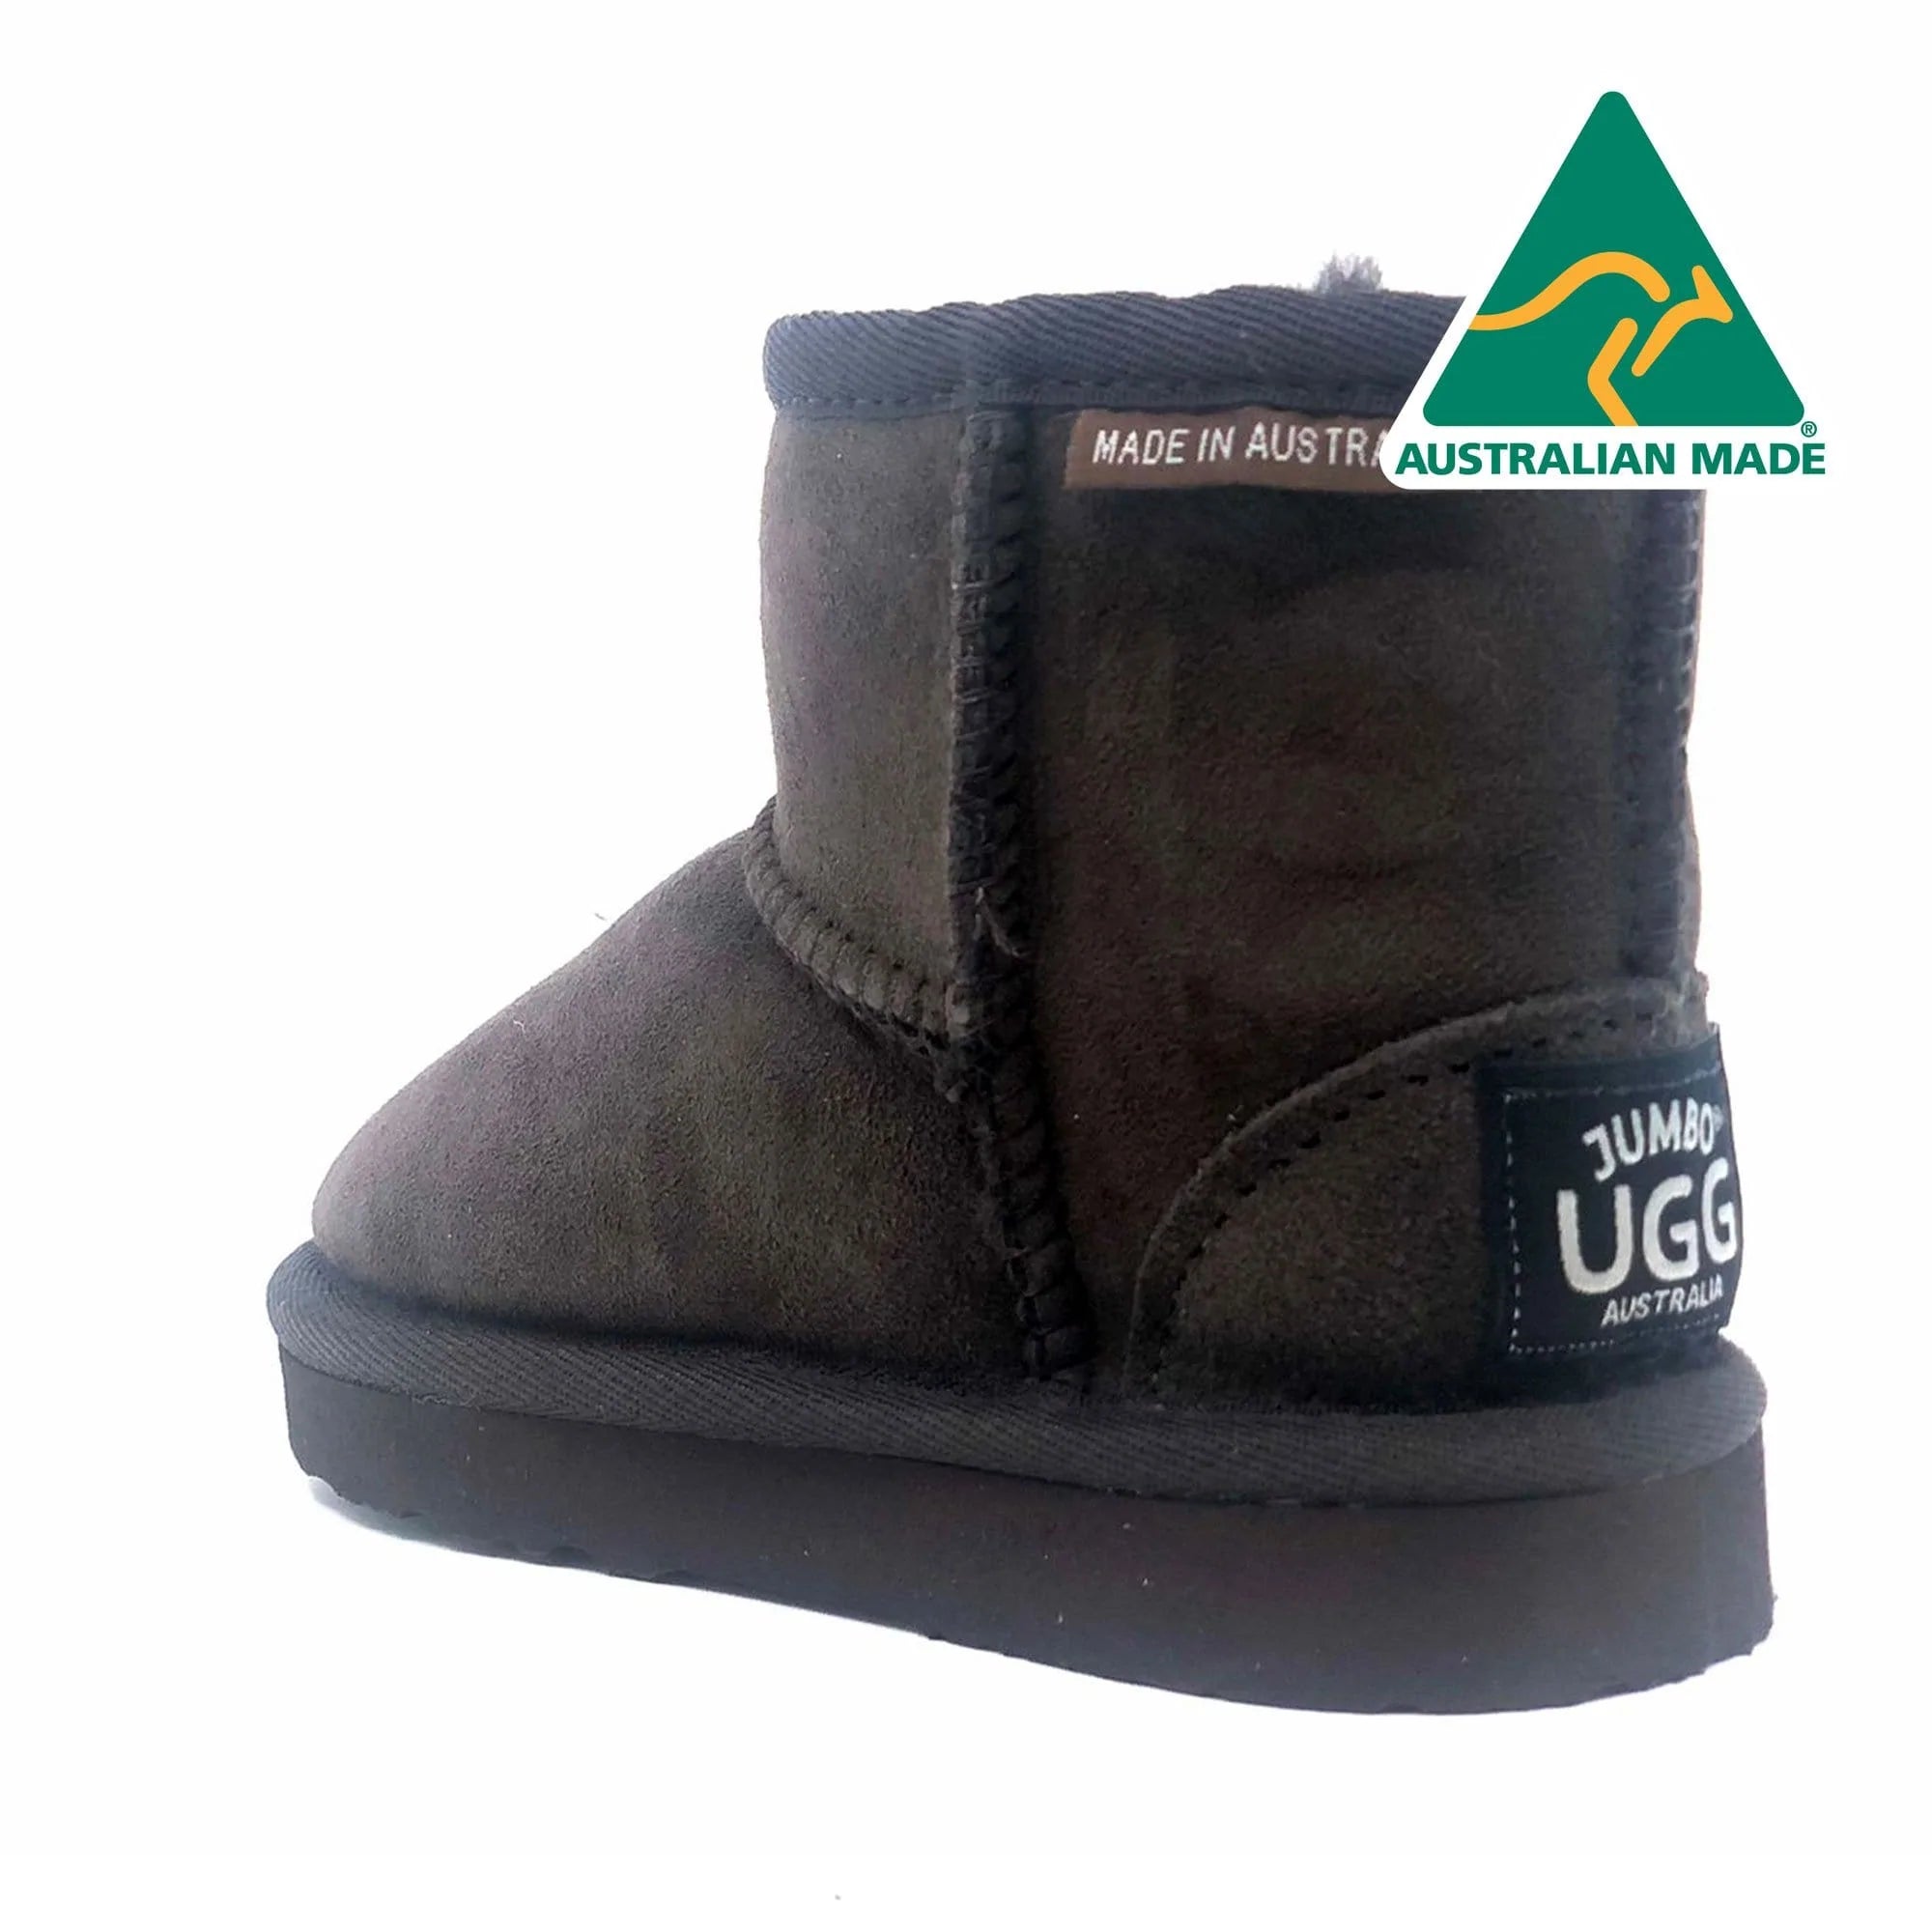 Ugg Boots - UGG Kids Ultra Short Classic - Original UGG Australia Classic